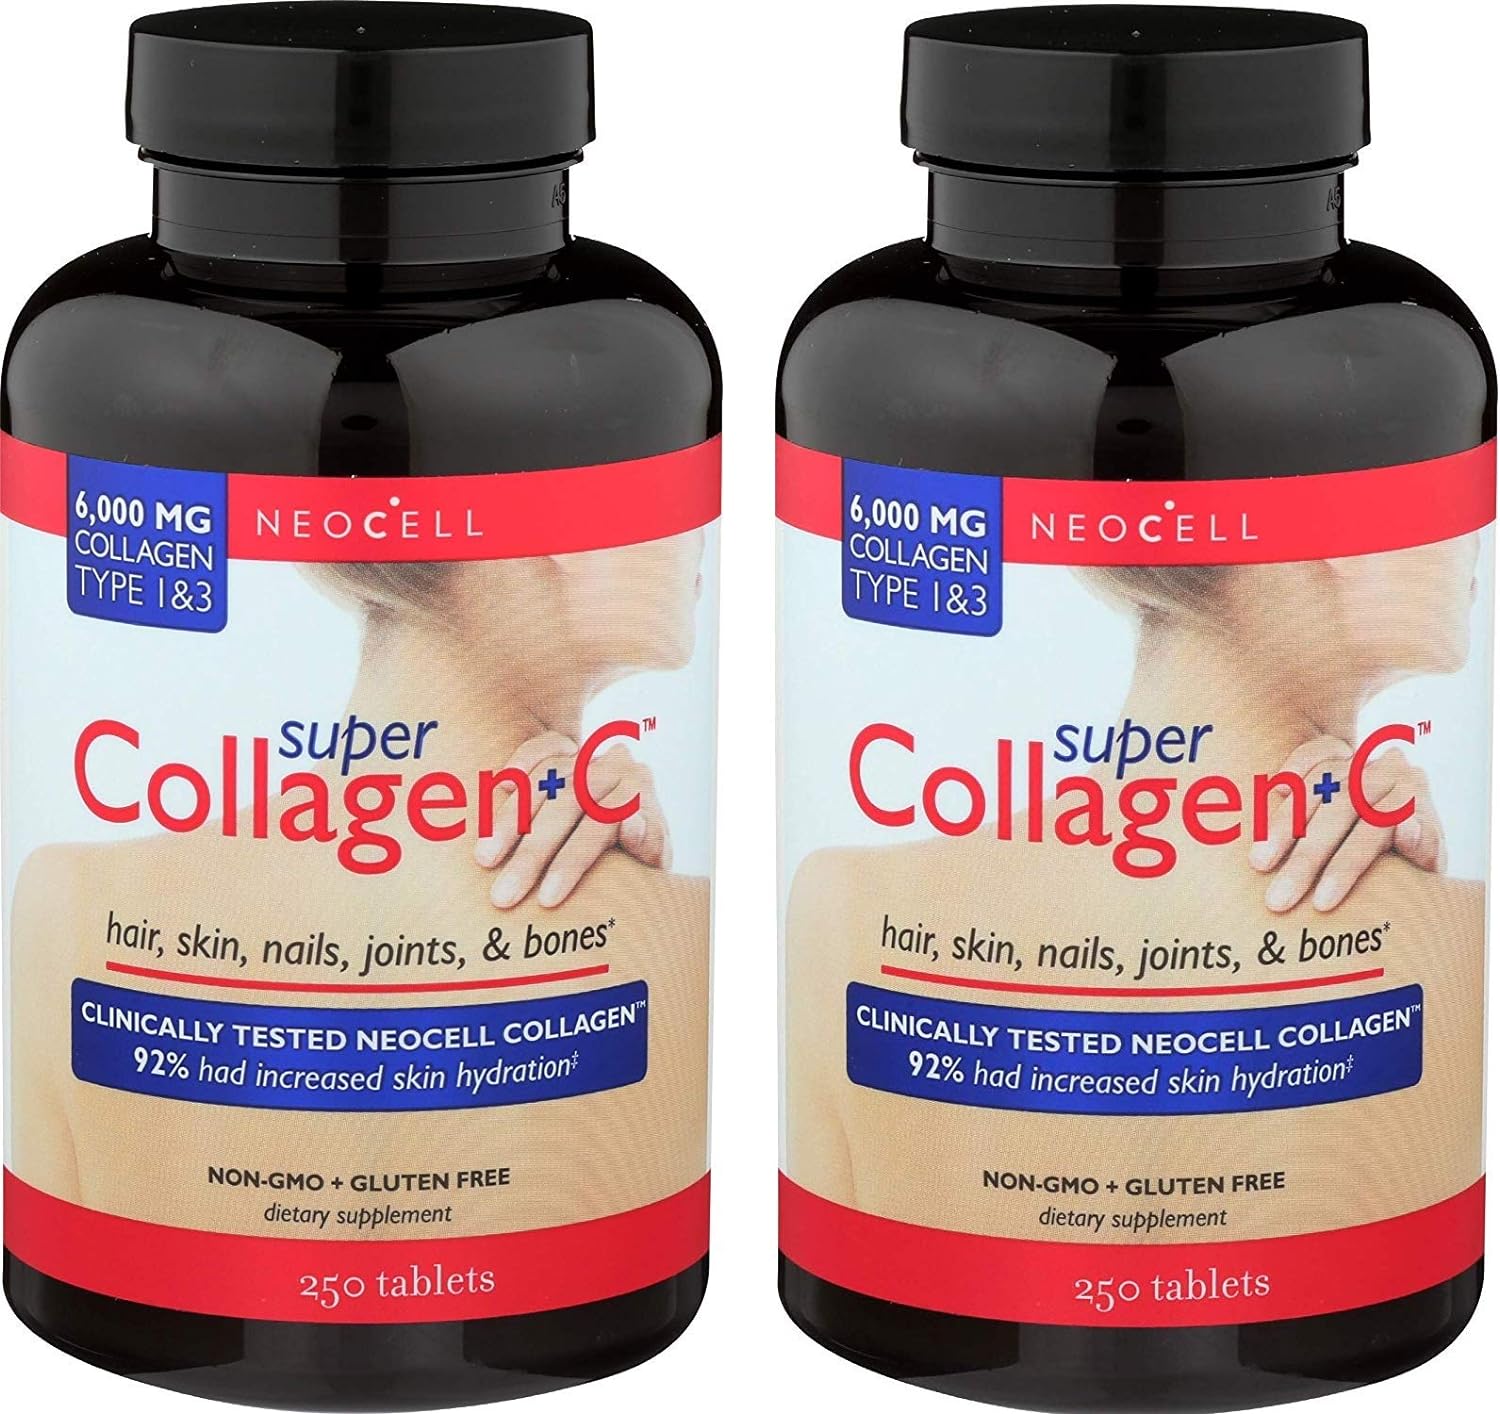 Свойства коллагена. Коллаген Neocell super Collagen+c Type 1 & 3, 6000 MG., 250 капсул, США. Collagen 6000mg. Коллаген преимущества.